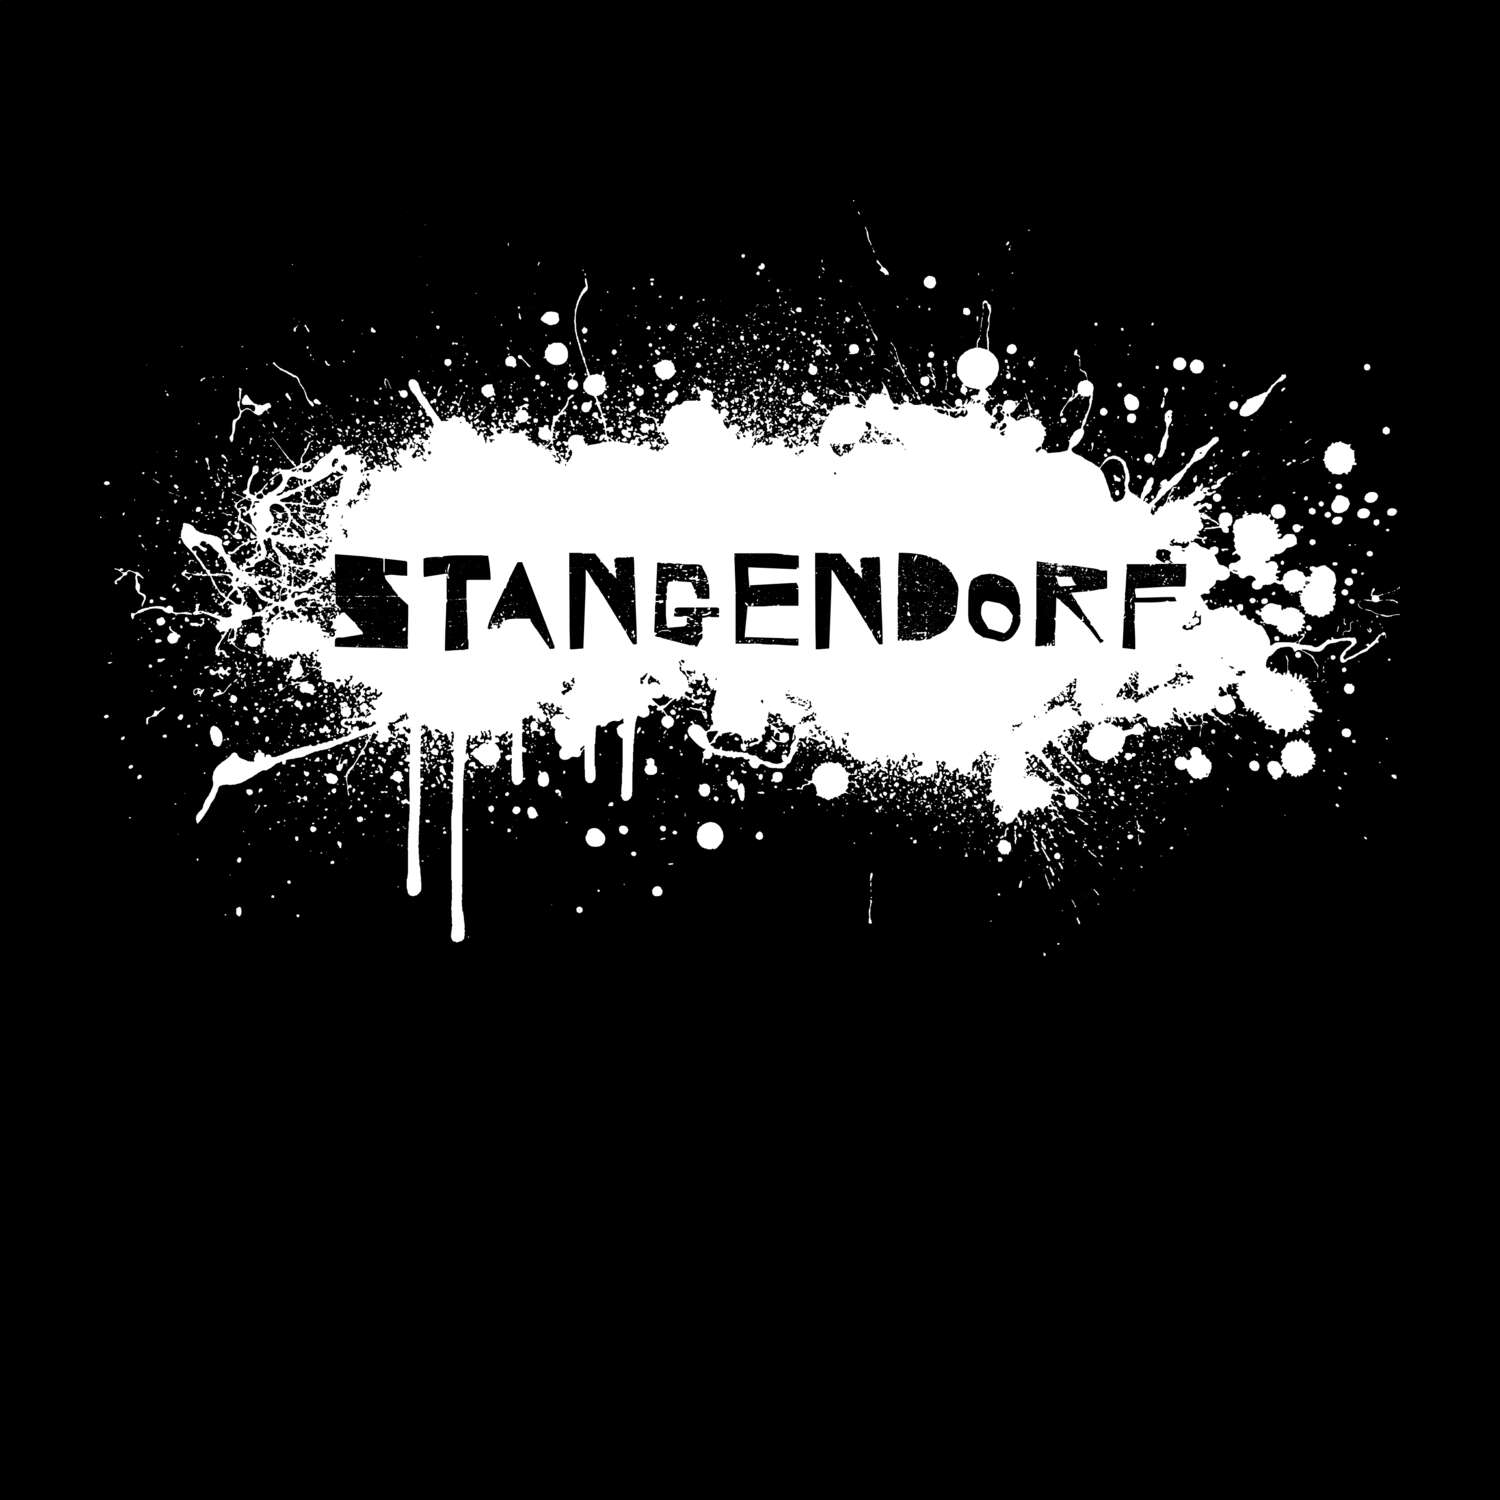 Stangendorf T-Shirt »Paint Splash Punk«